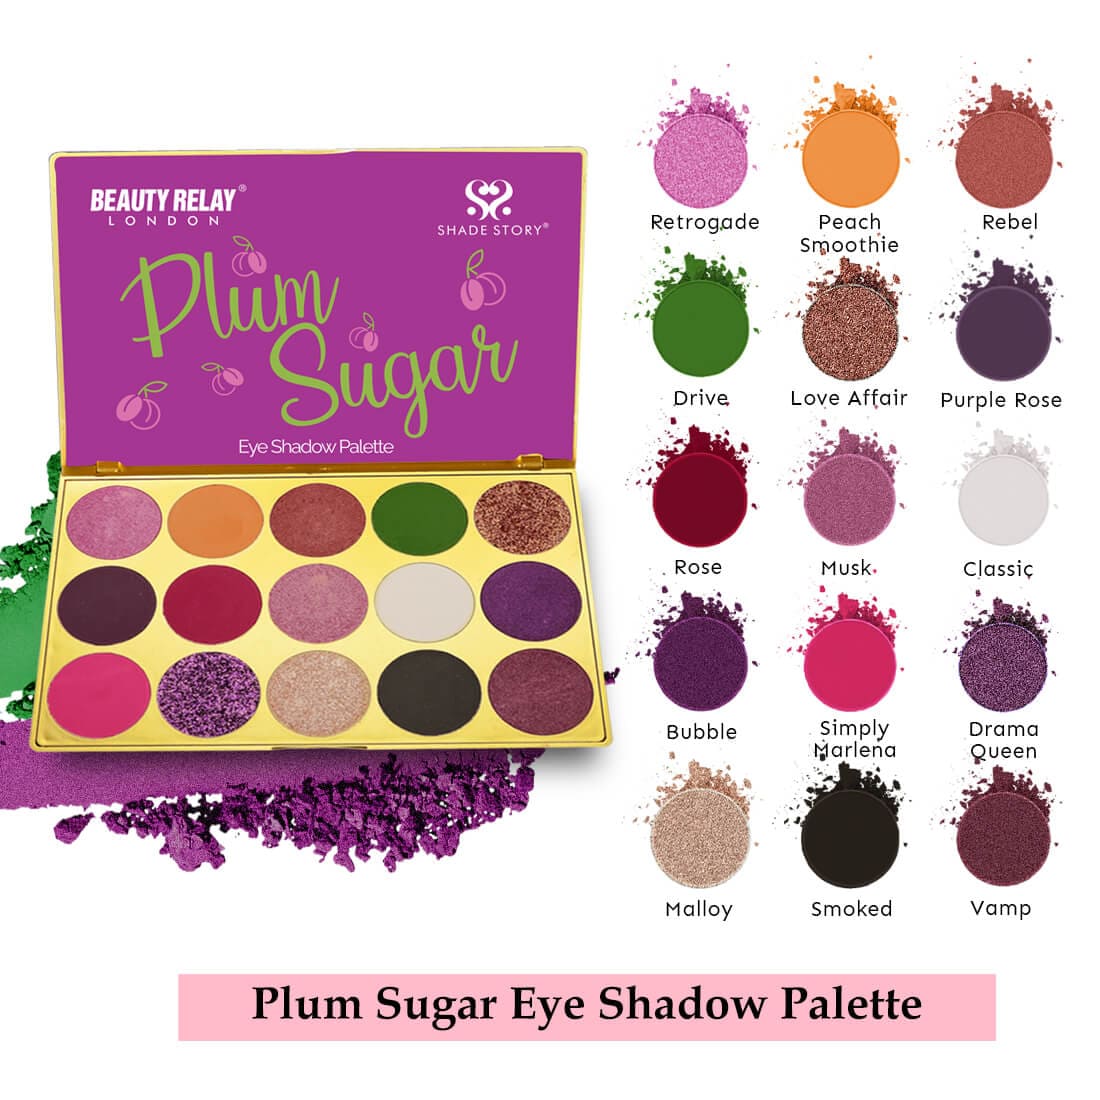 Plum Sugar Eye Shadow Palette - Beauty Relay India